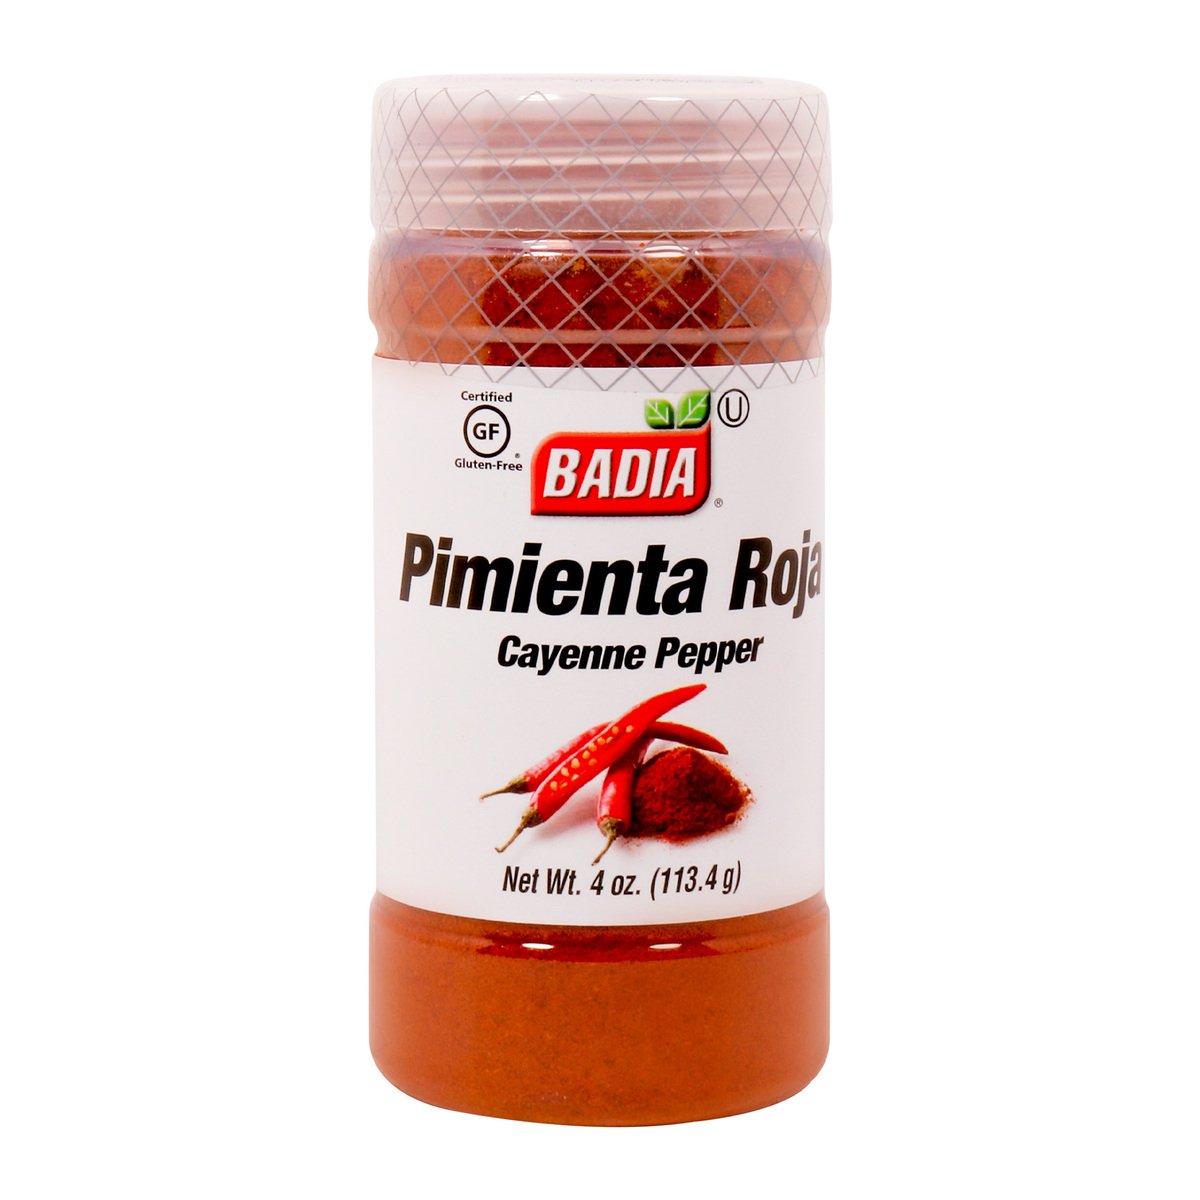 Badia Pimienta Roja Cayenne Pepper 113.4 g